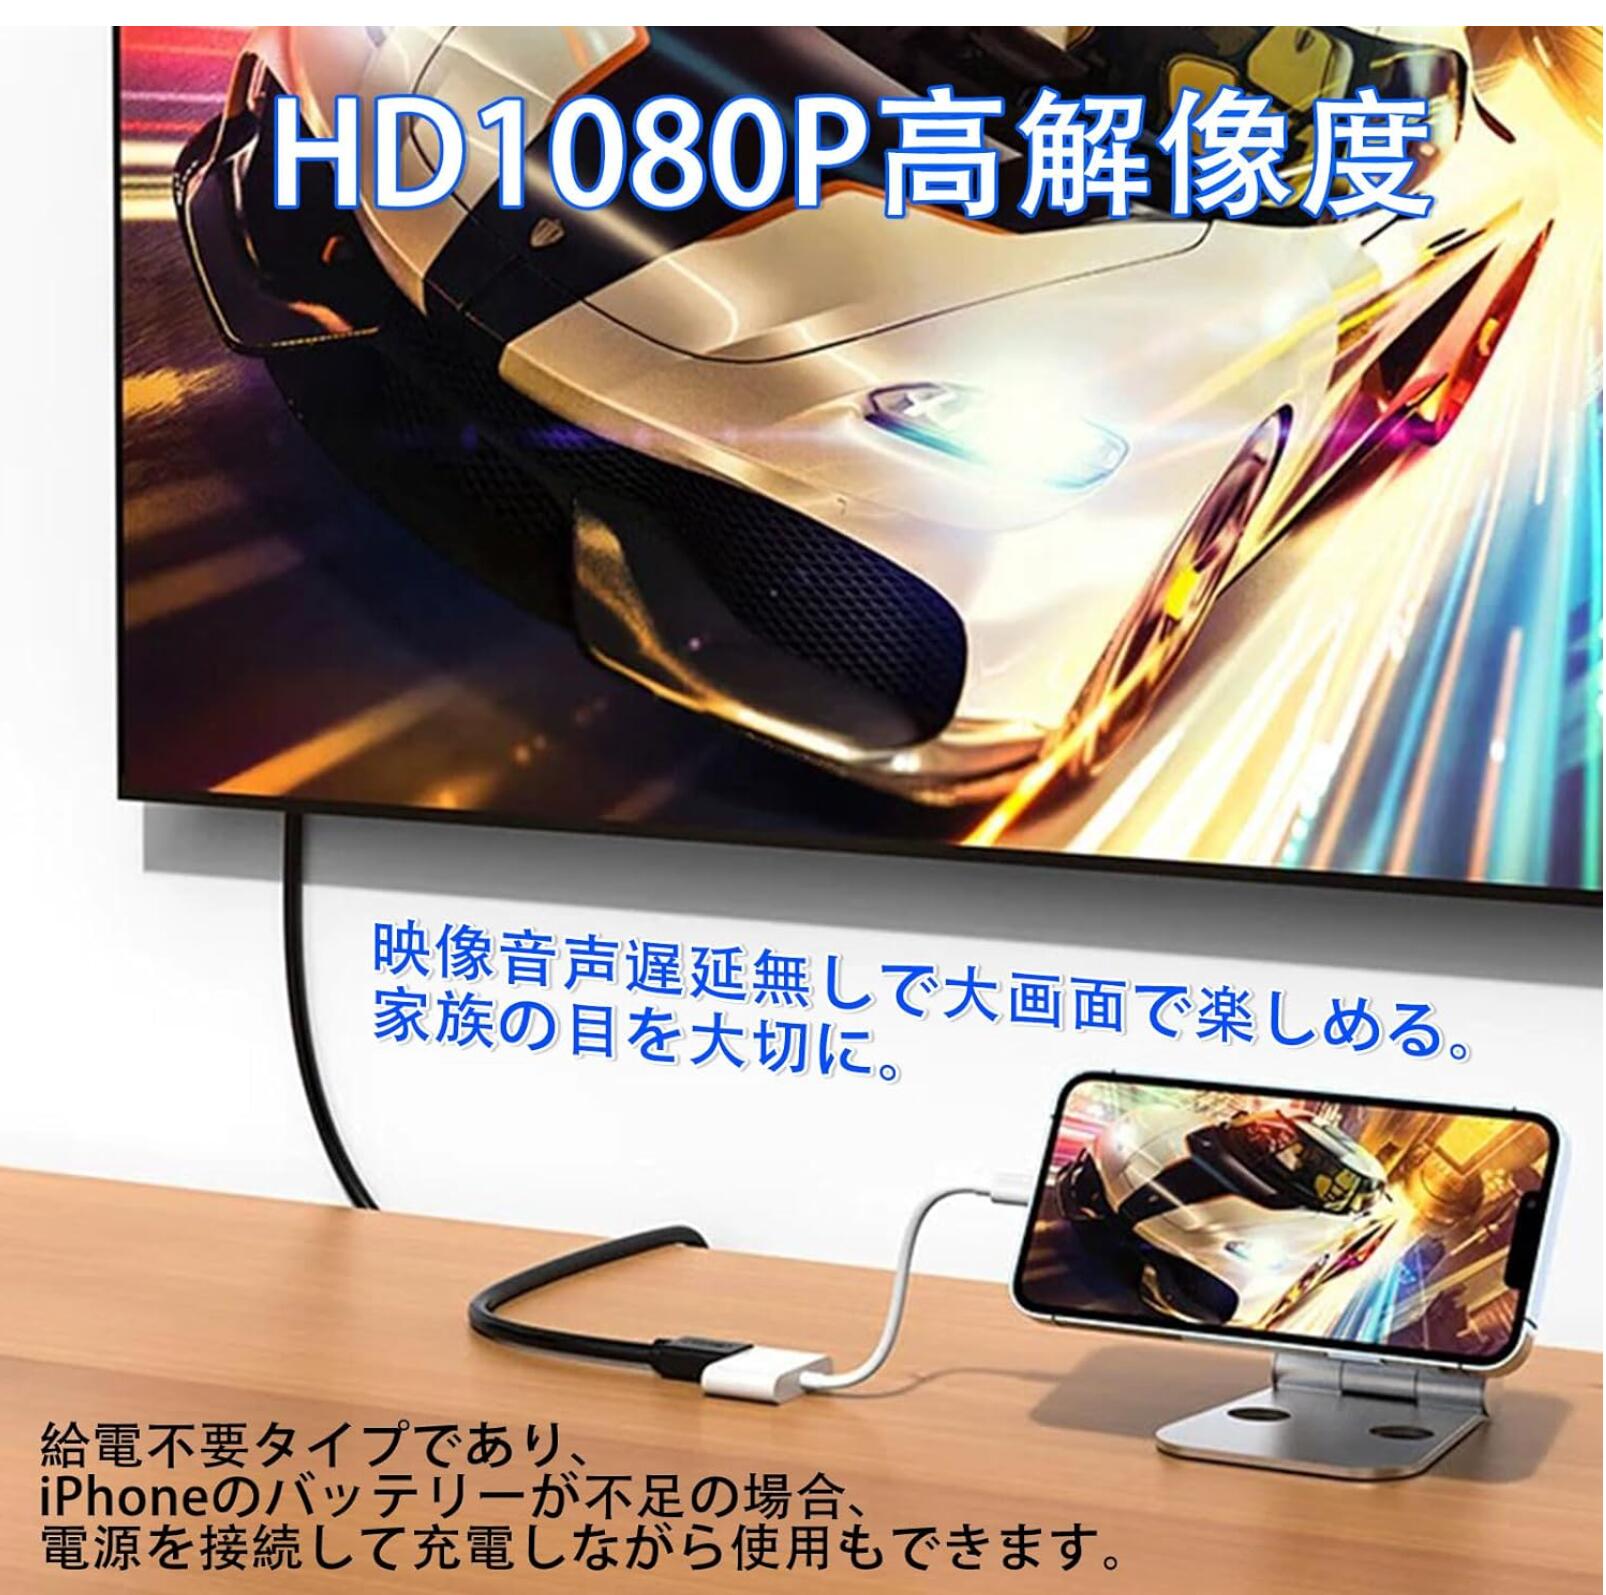 iphone ipad Lightning Digital AVアダプタ 給電不要HDMI 変換アダプタ ライトニング ケーブル 1080P  IOS12 13 14 15 16 17 対応 アップル純正品質